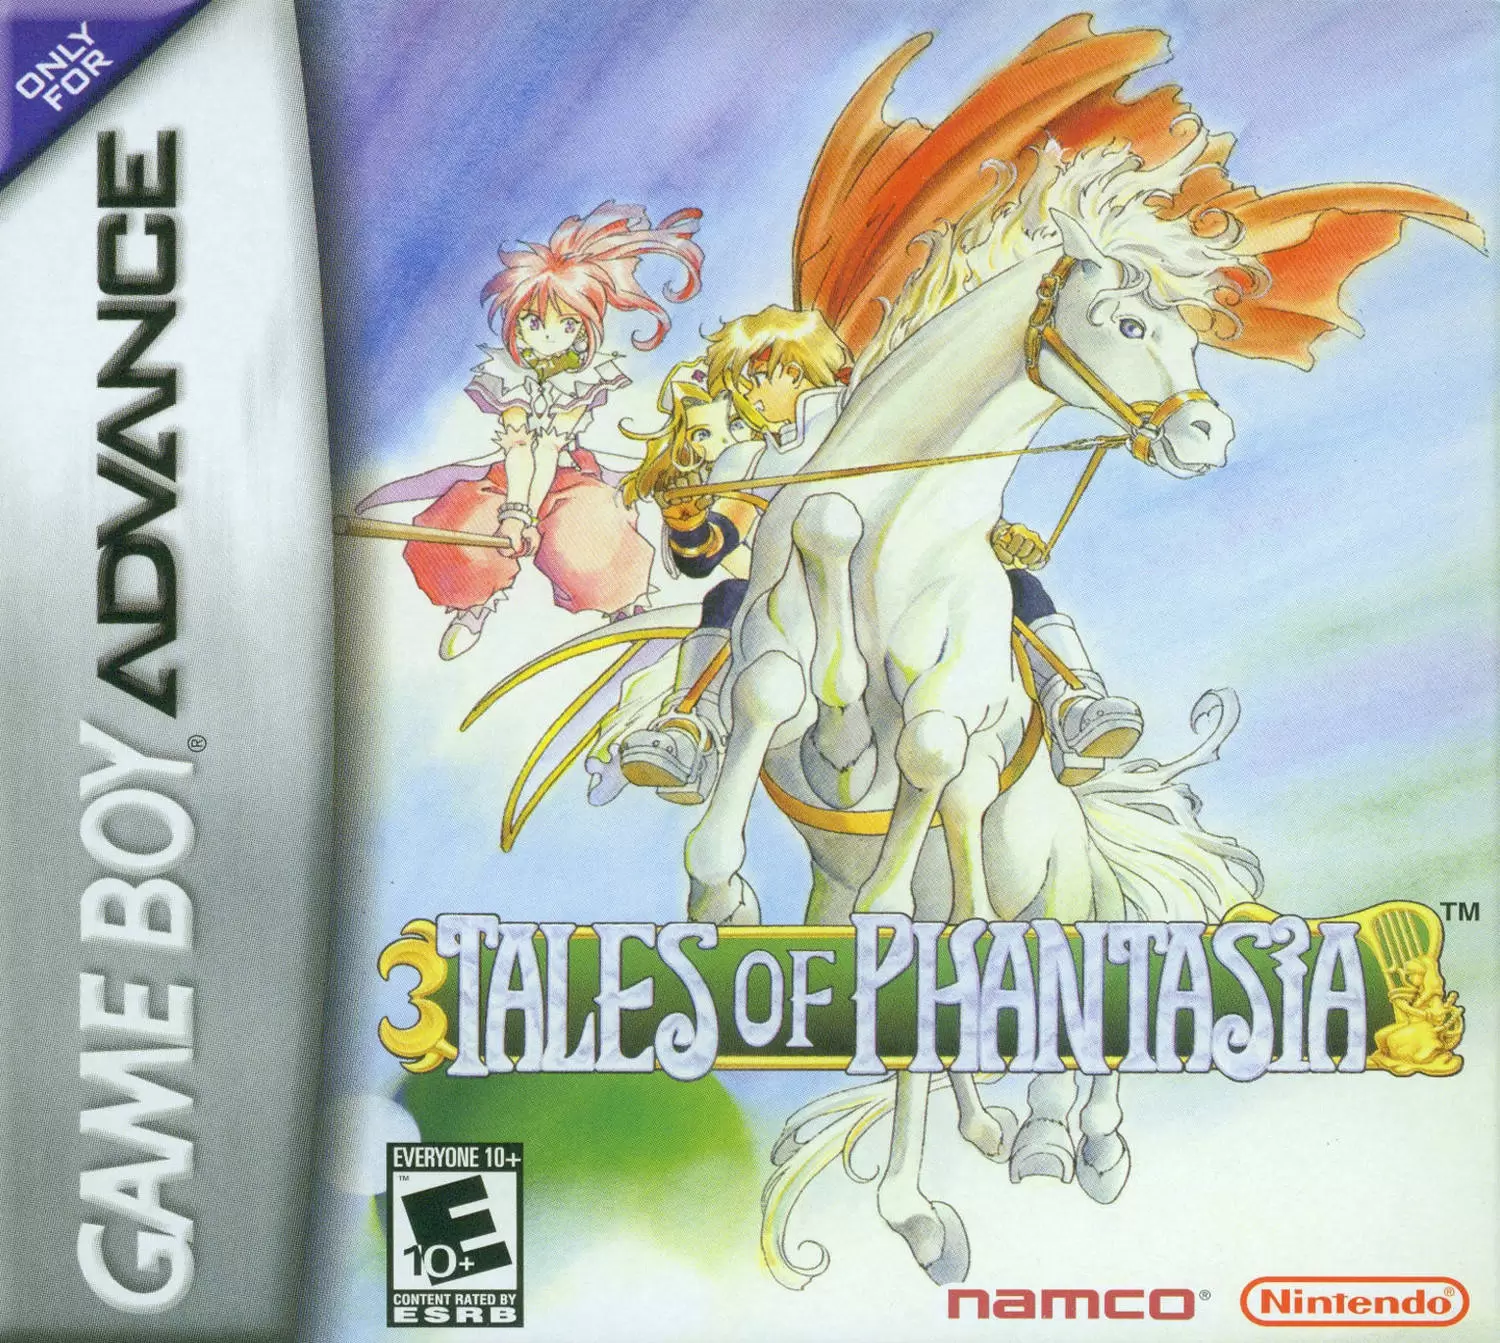 Game Boy Advance Games - Tales of Phantasia